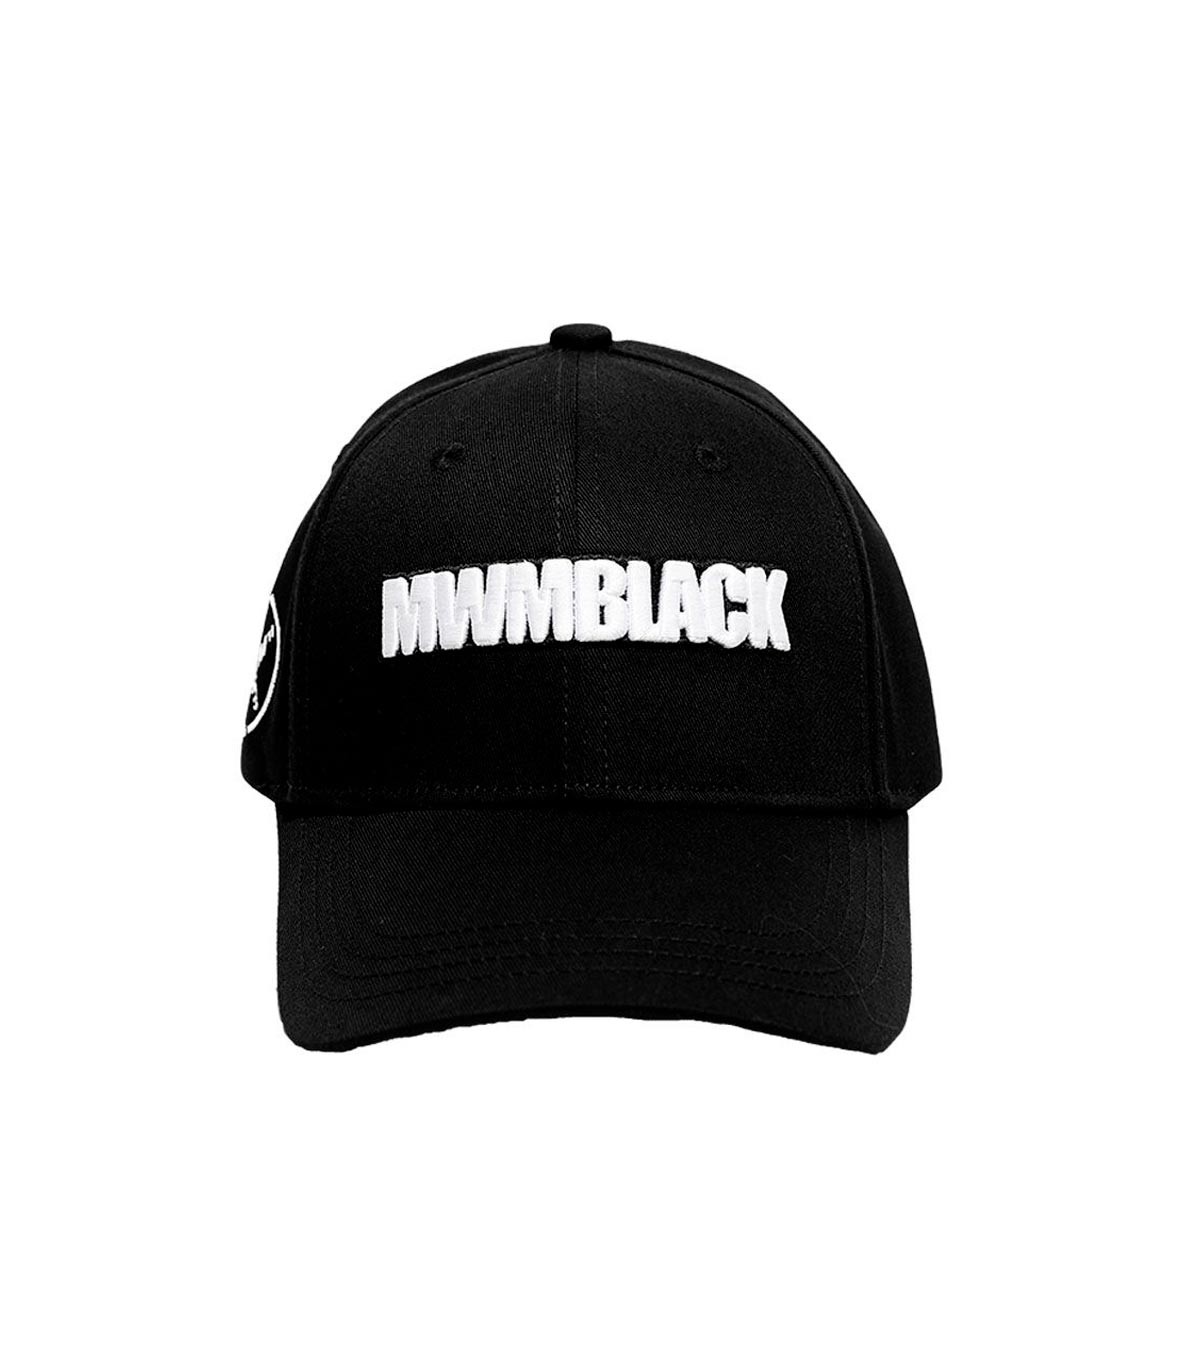 Mod Wave Movement - Gorra Black Capsule - Negro